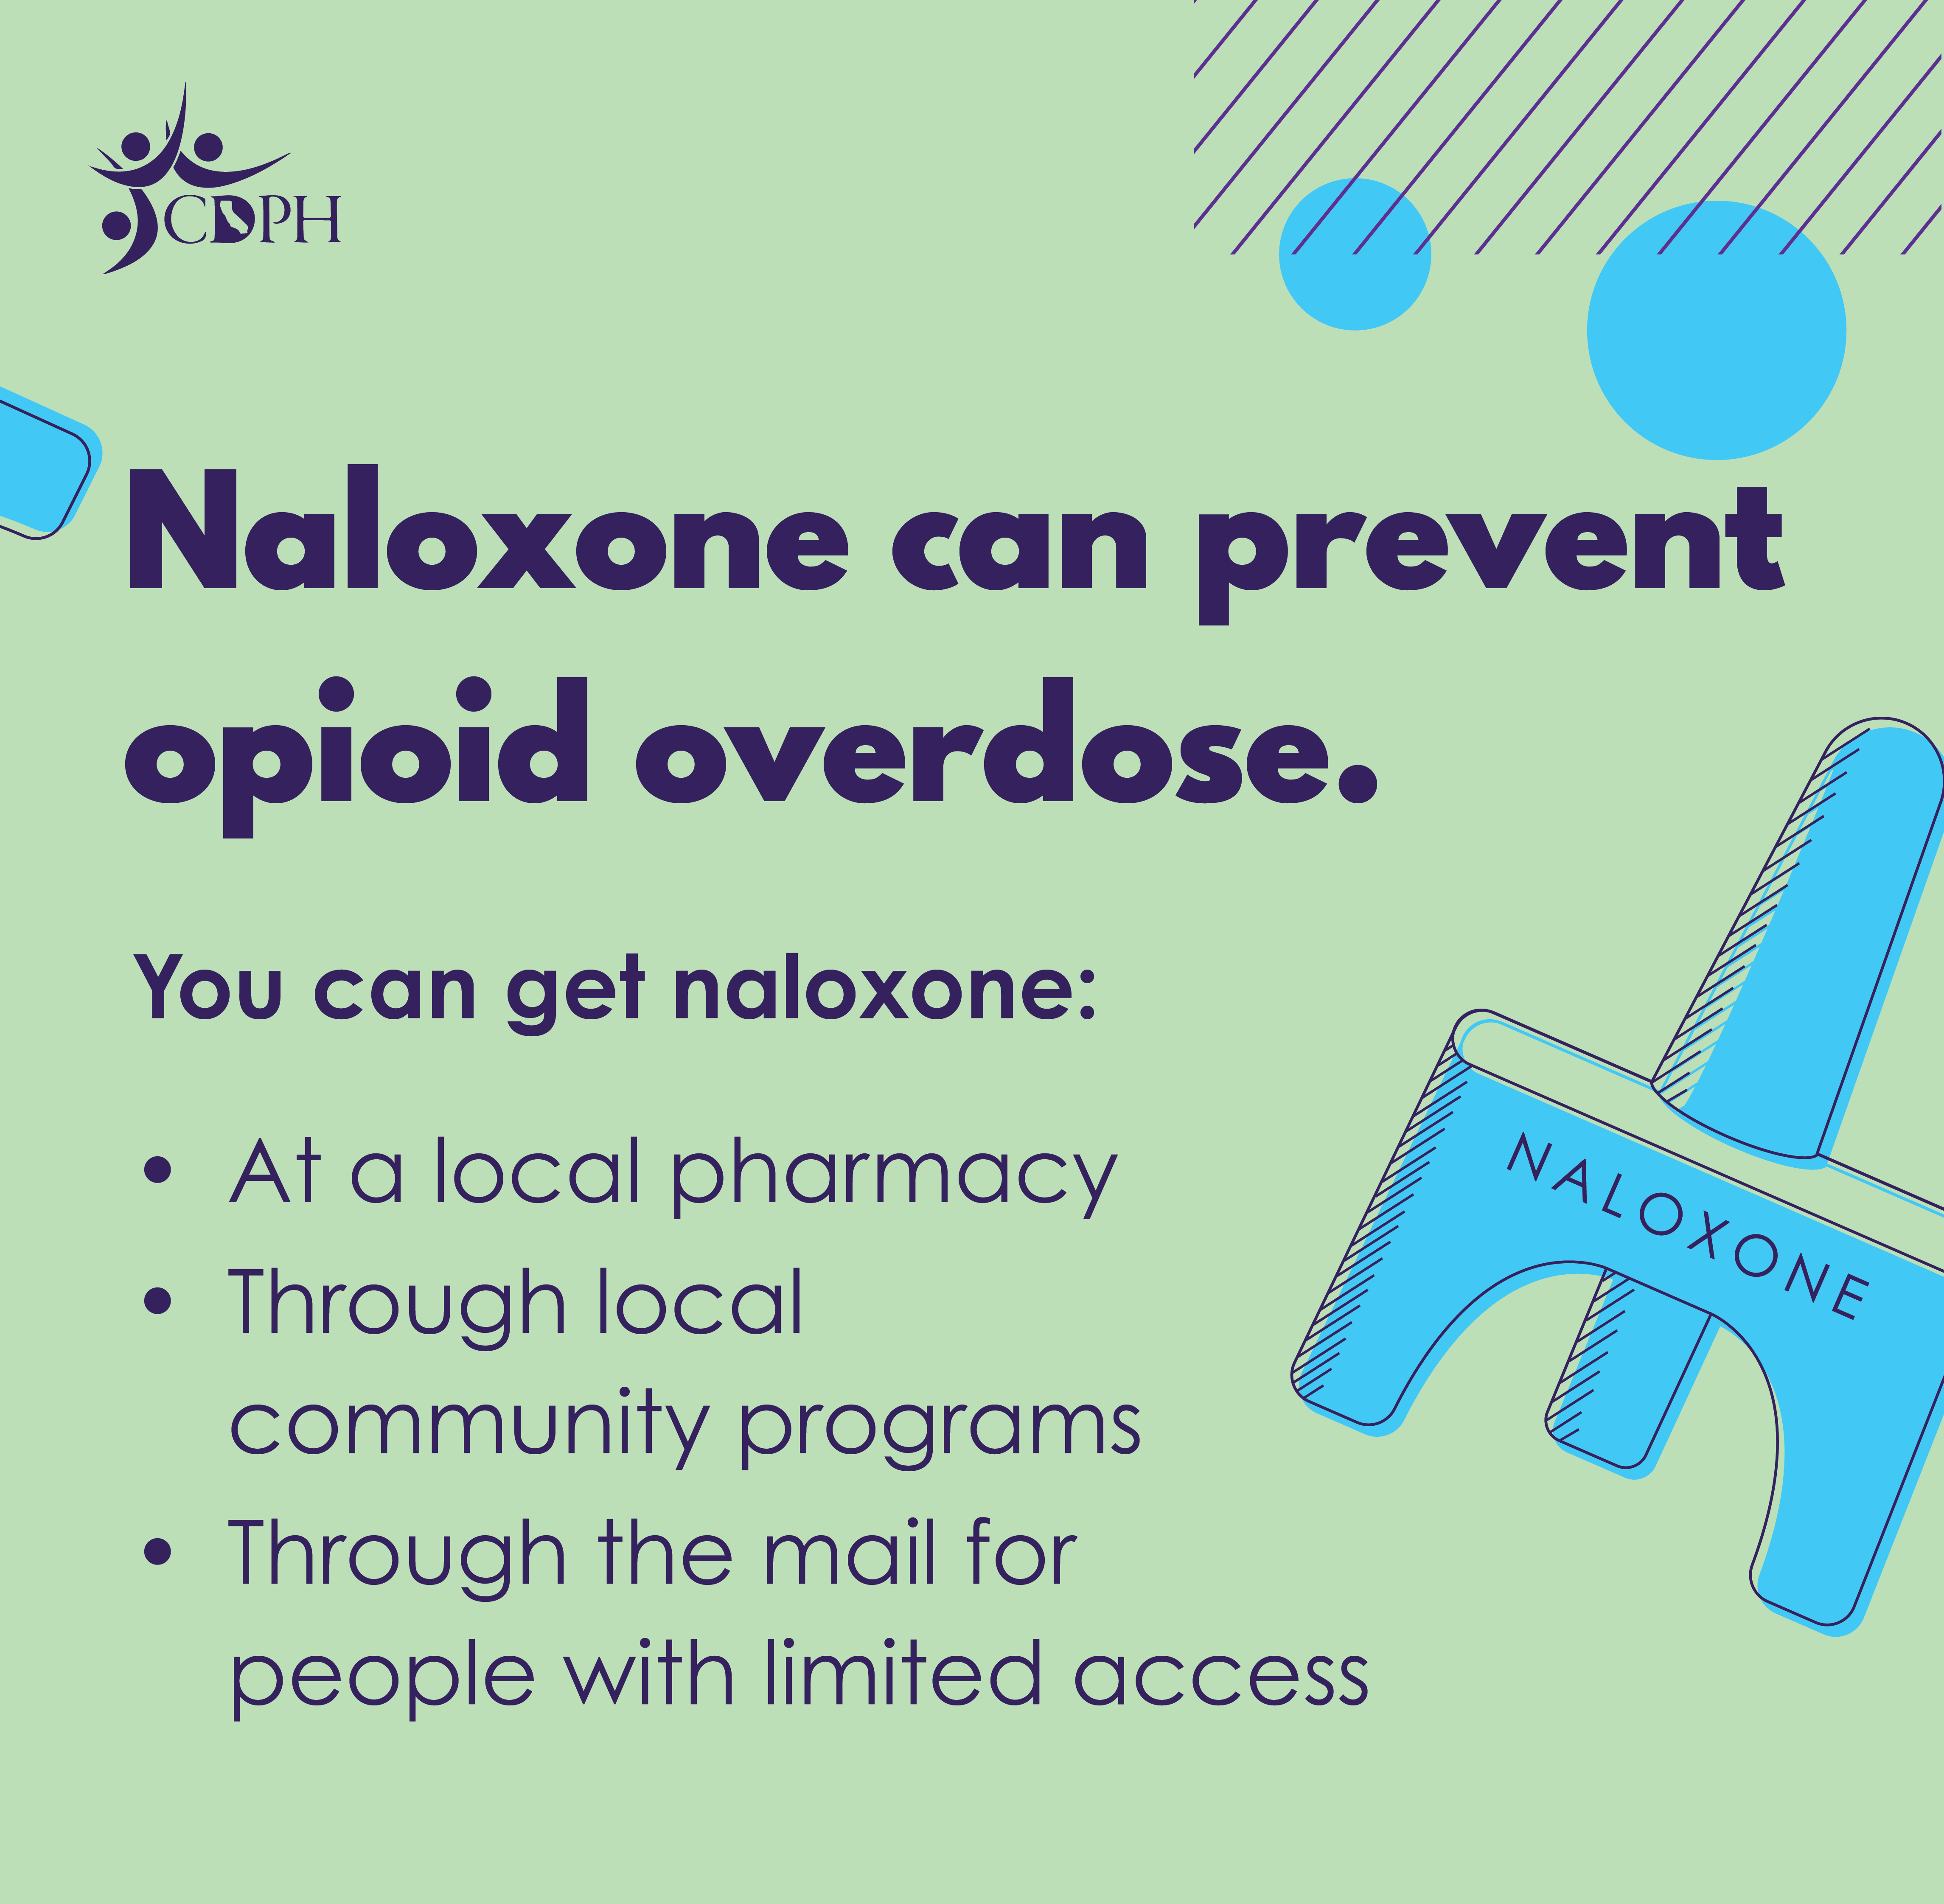 Naloxone can prevent opioid overdose